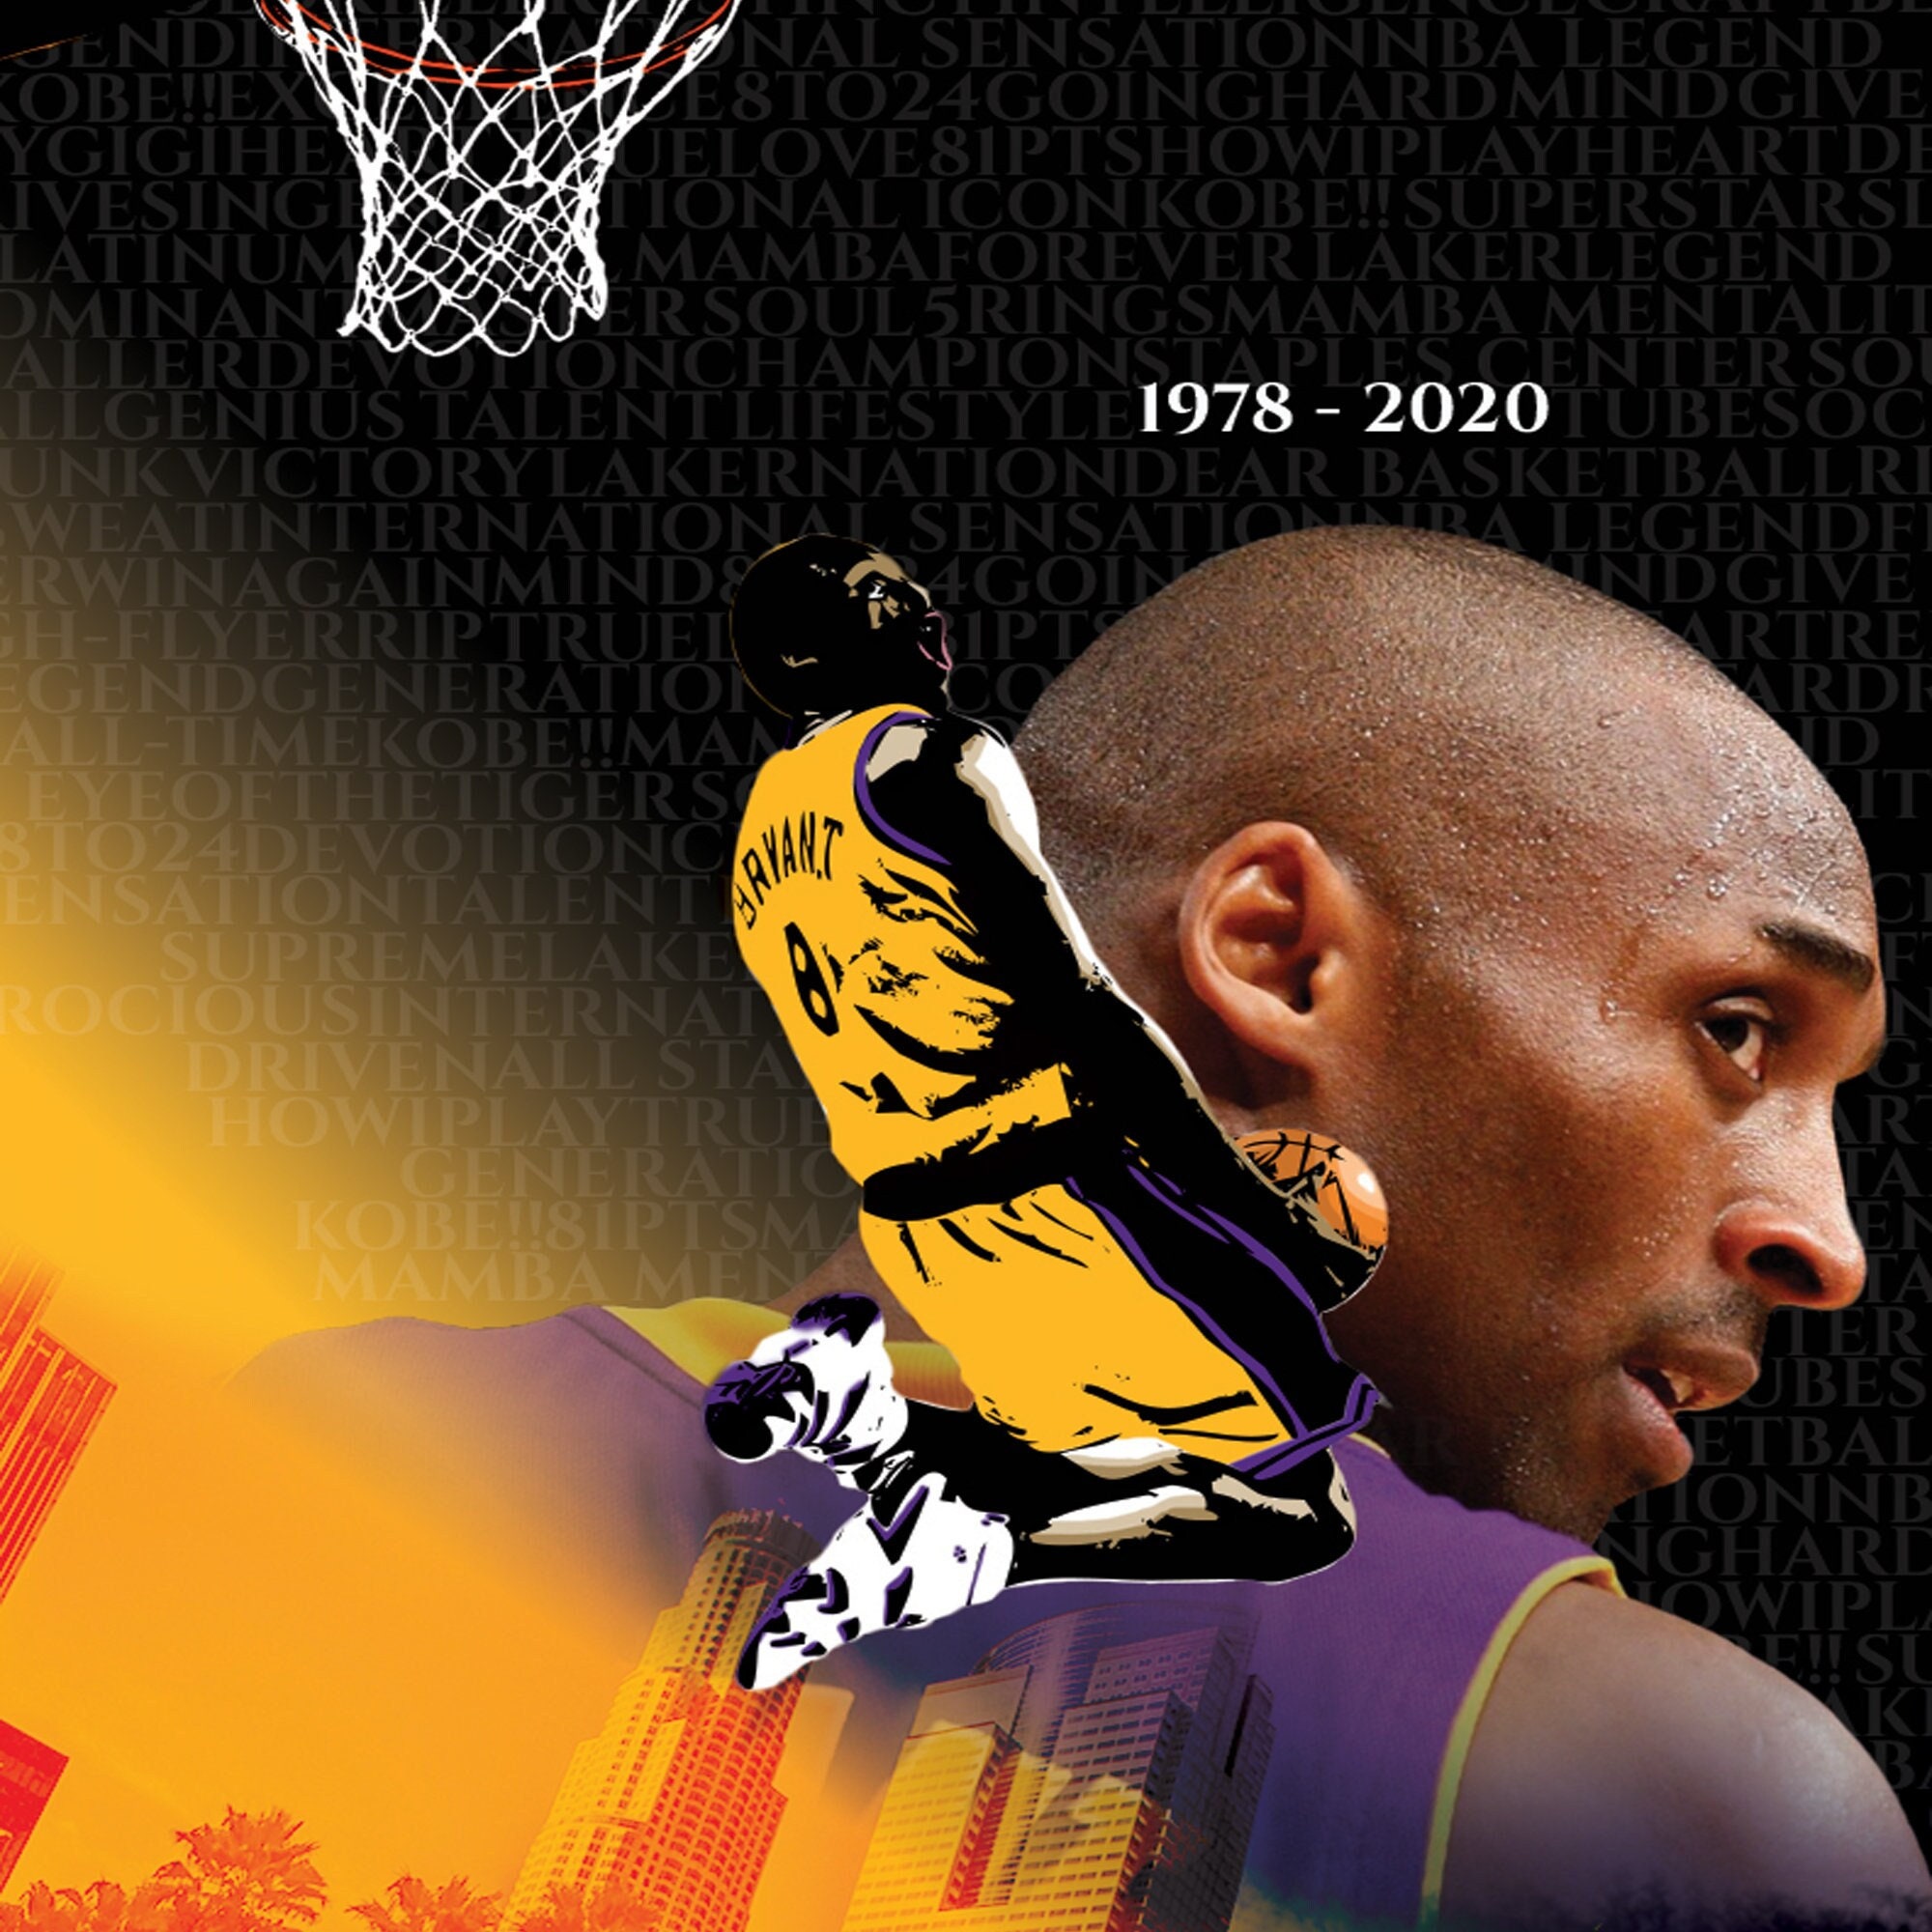 Tribute to Forever 24 - Kobe Bryant